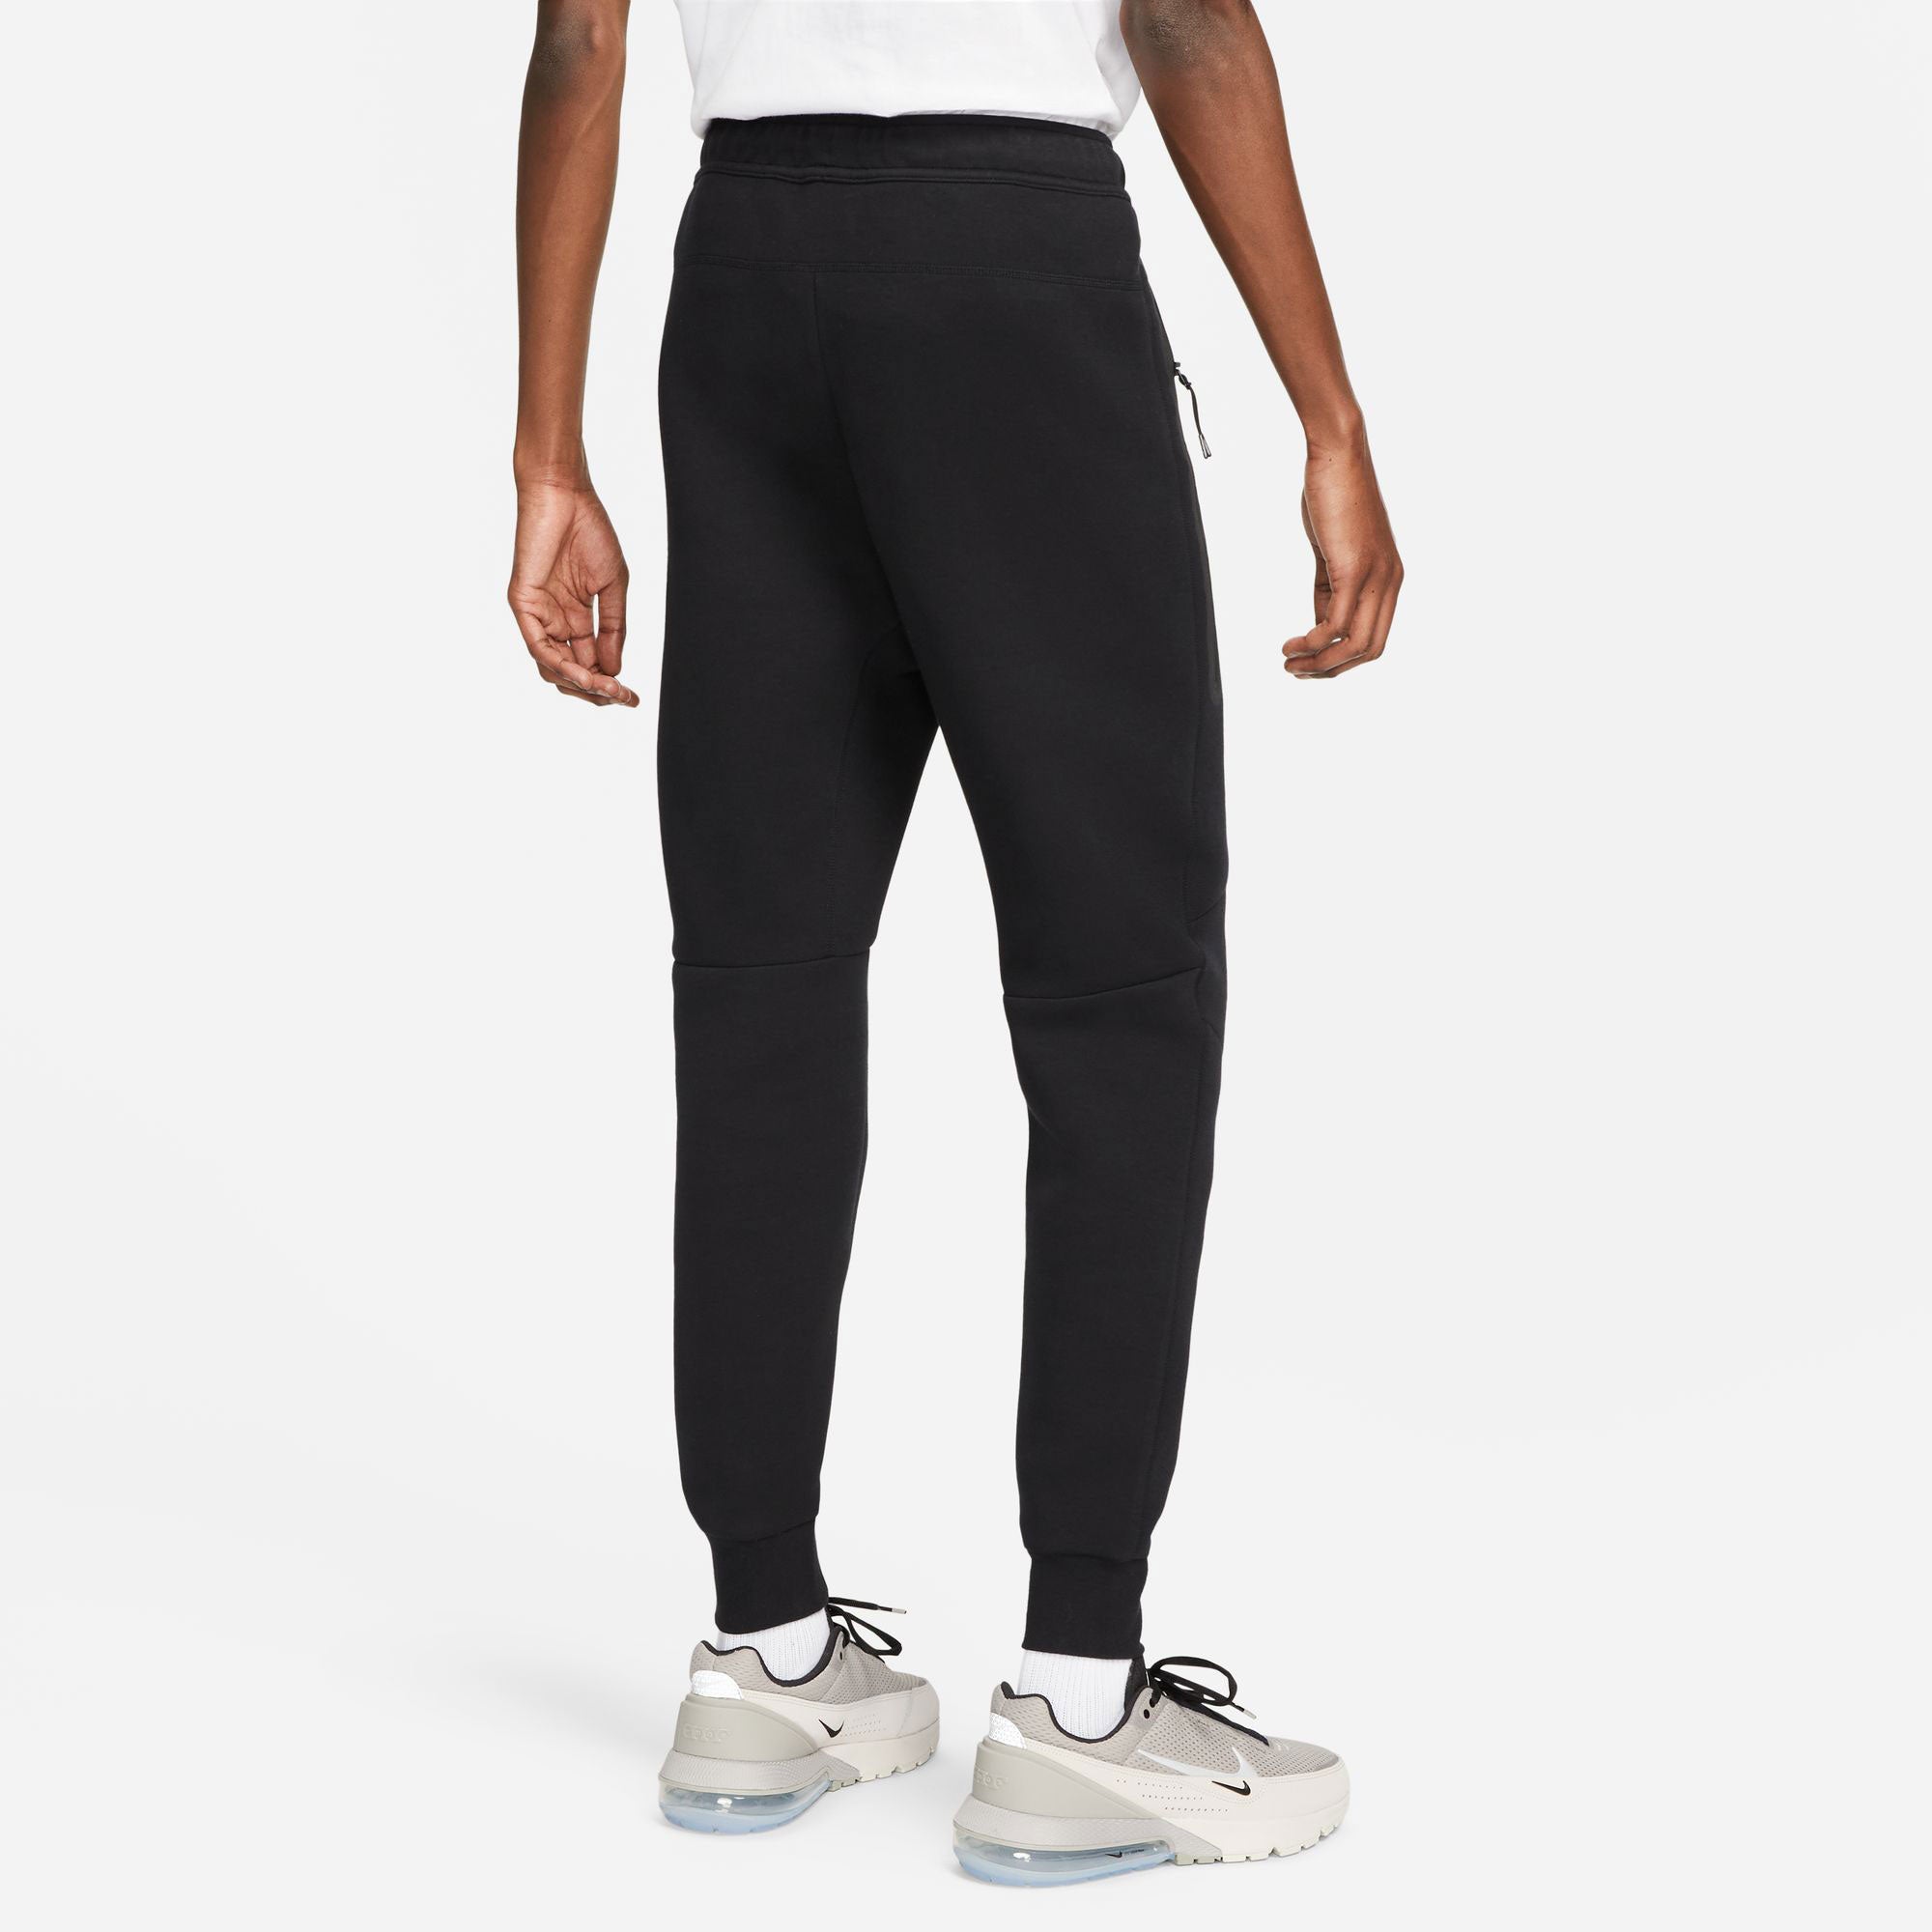 Nike Tech Fleece Men's Pants - Black (2)